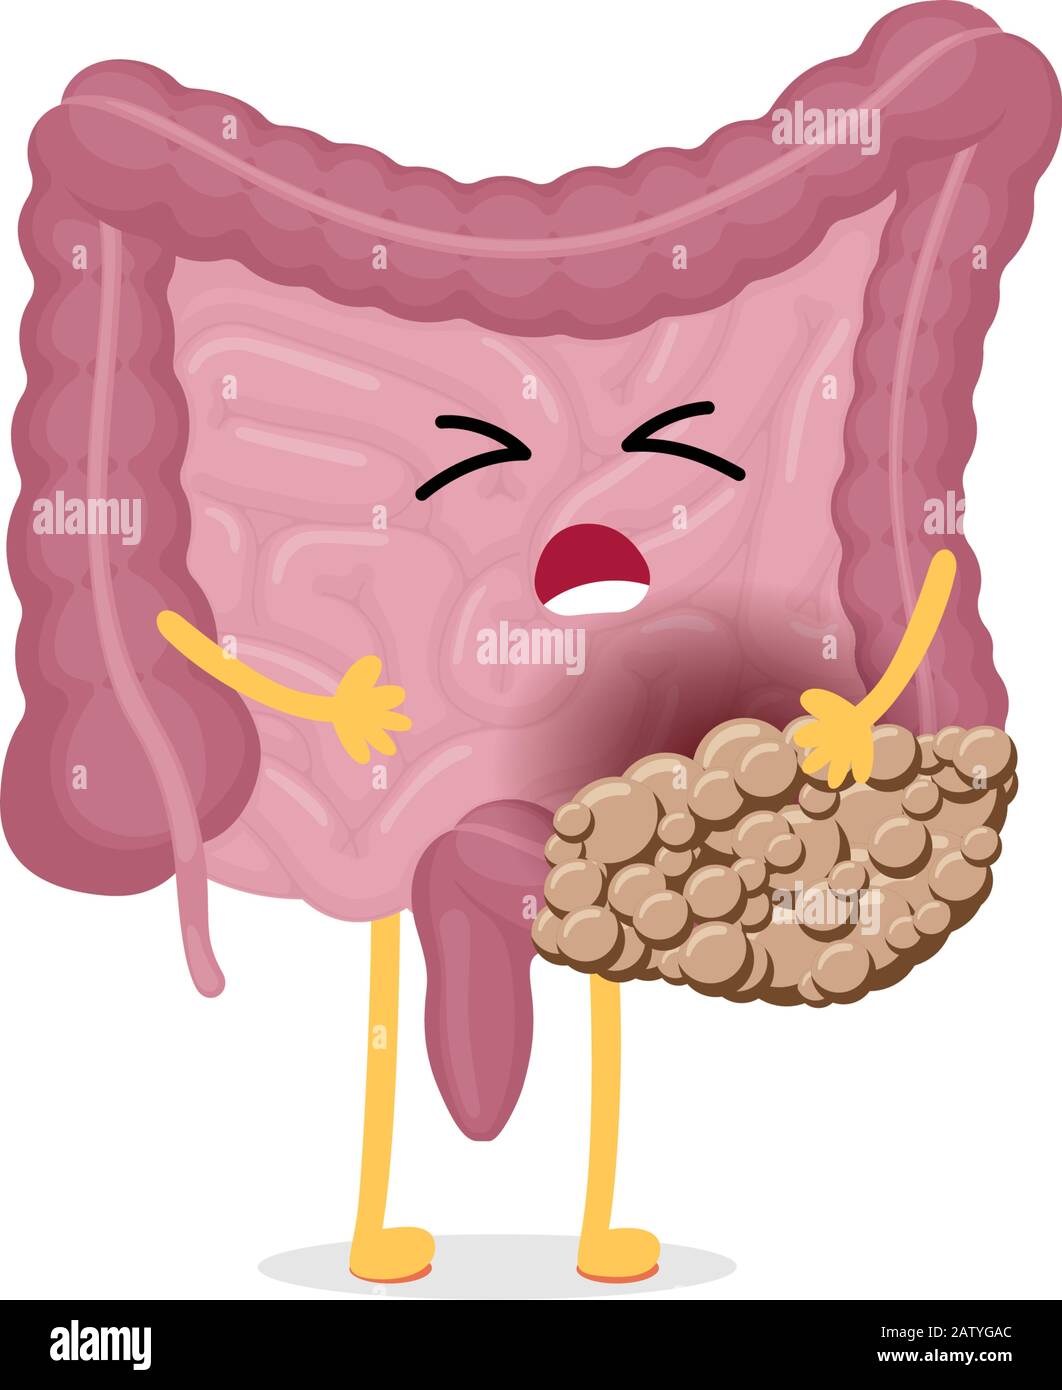 Sad suffering sick intestine colon cancer pain cartoon character. Abdominal cavity digestive and excretion human internal unhealthy bowel carcinoma organ. Vector organ tumor isolated illustration Stock Vector